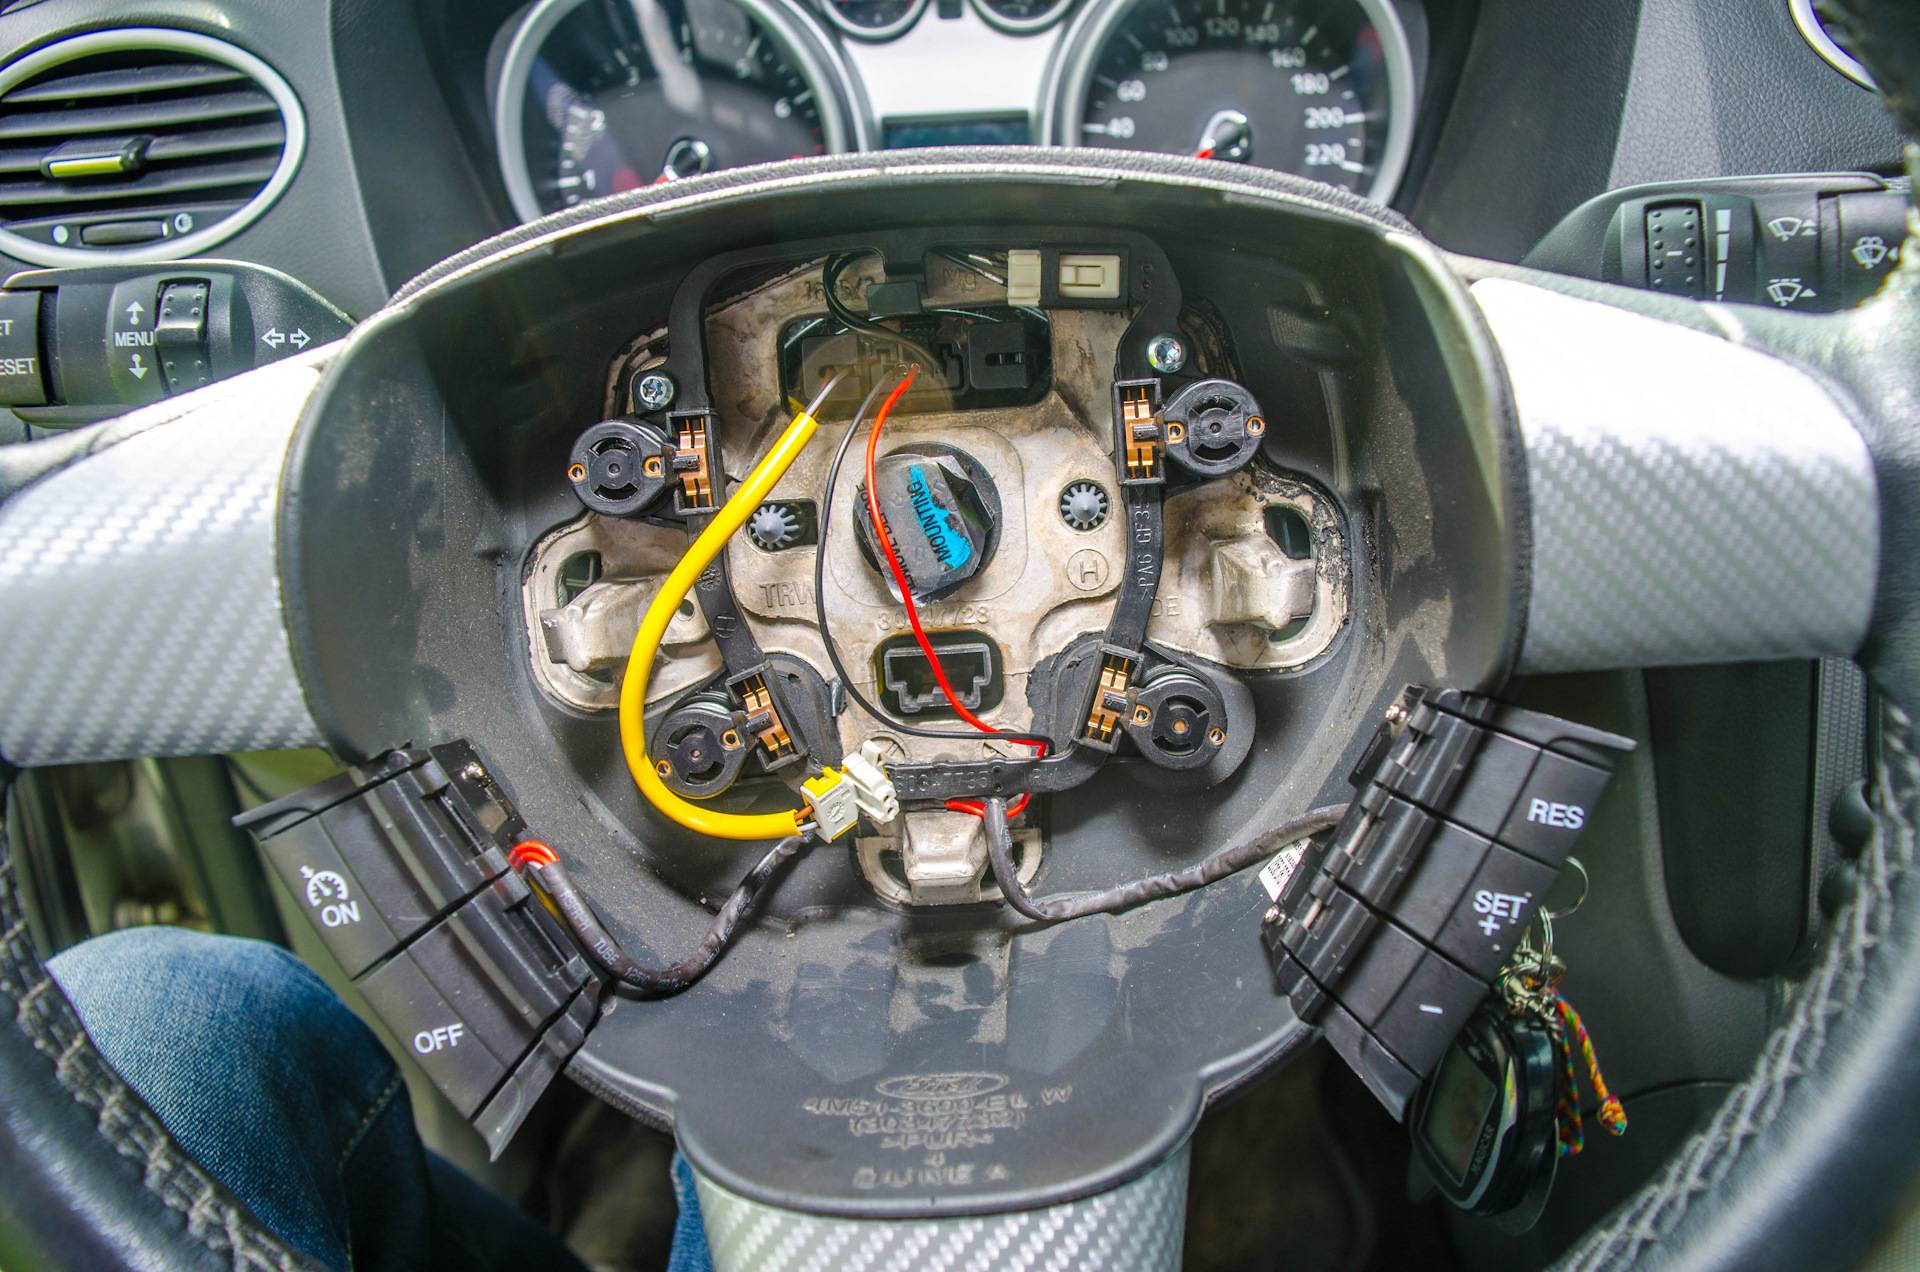 Установка круиз контроля на форд фокус: описание, настройка, подключение